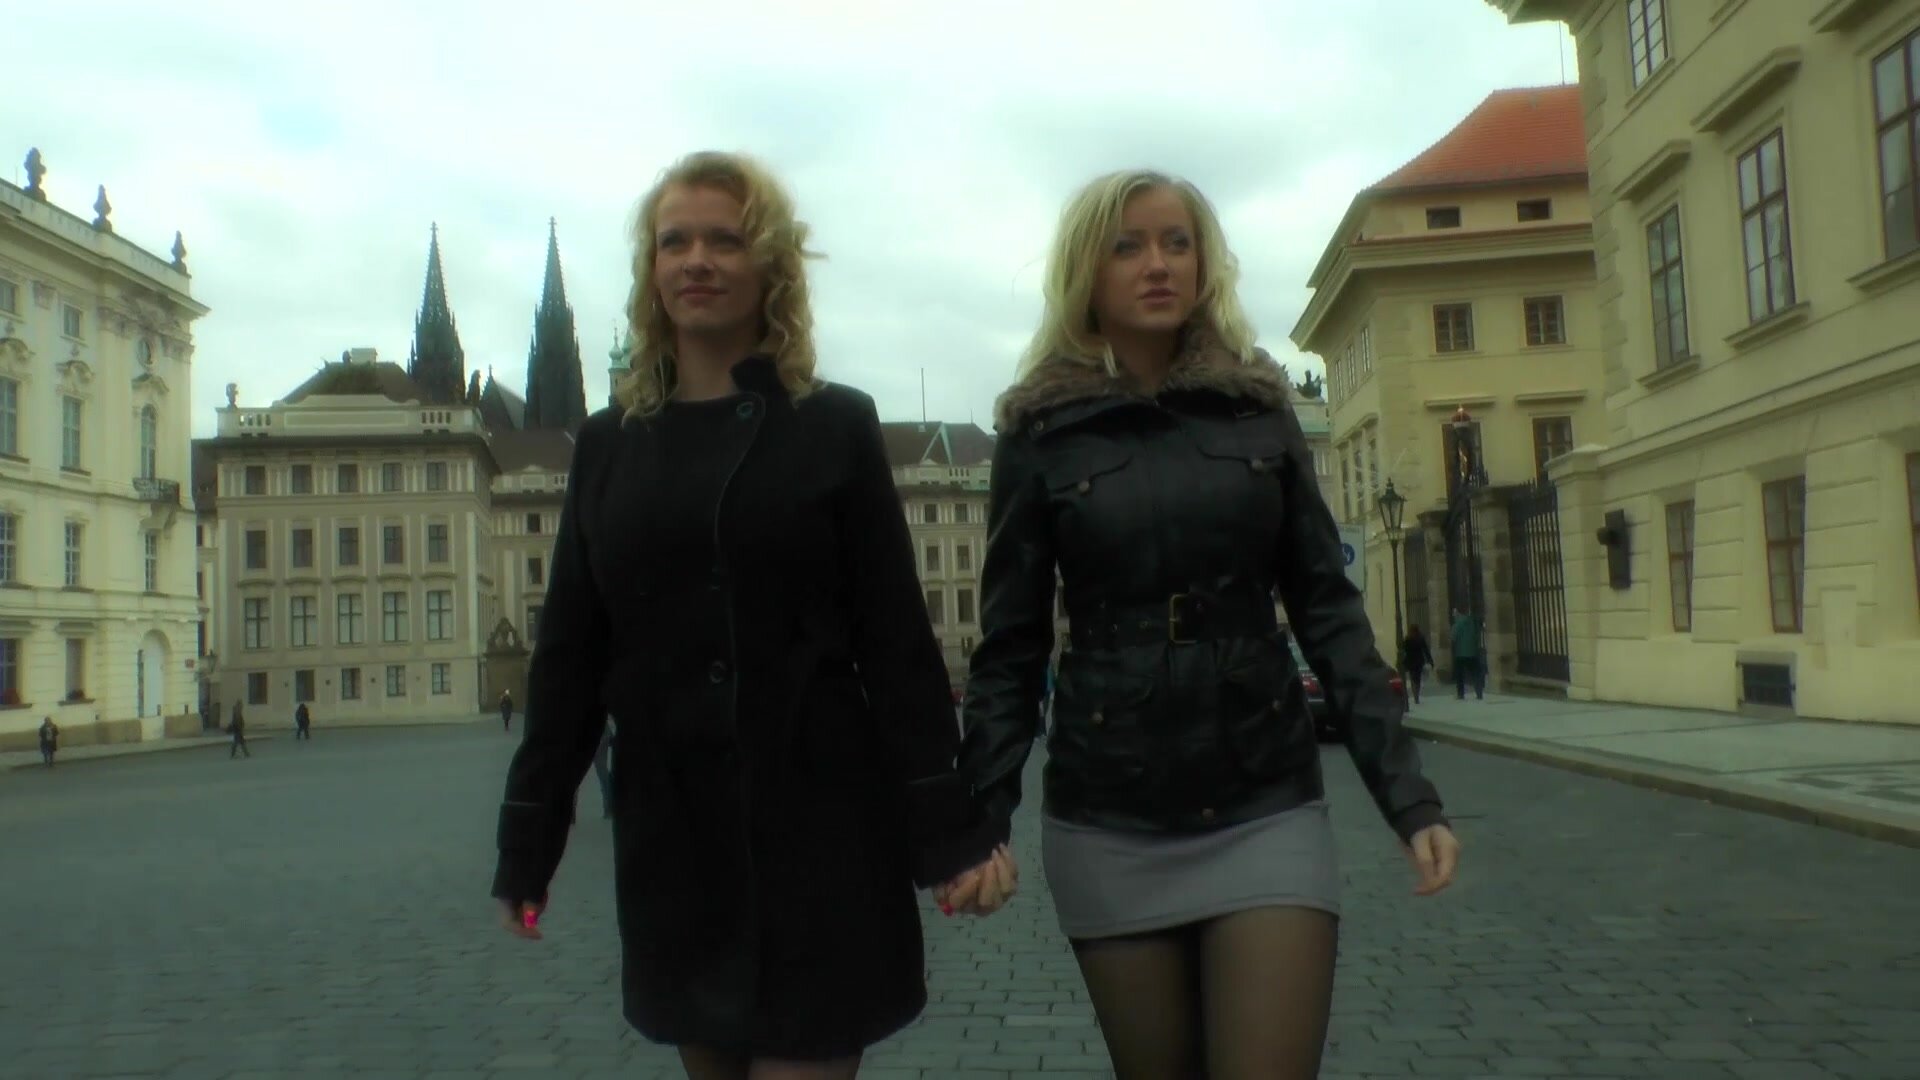 MagmaFilm - Blondes have more fun!